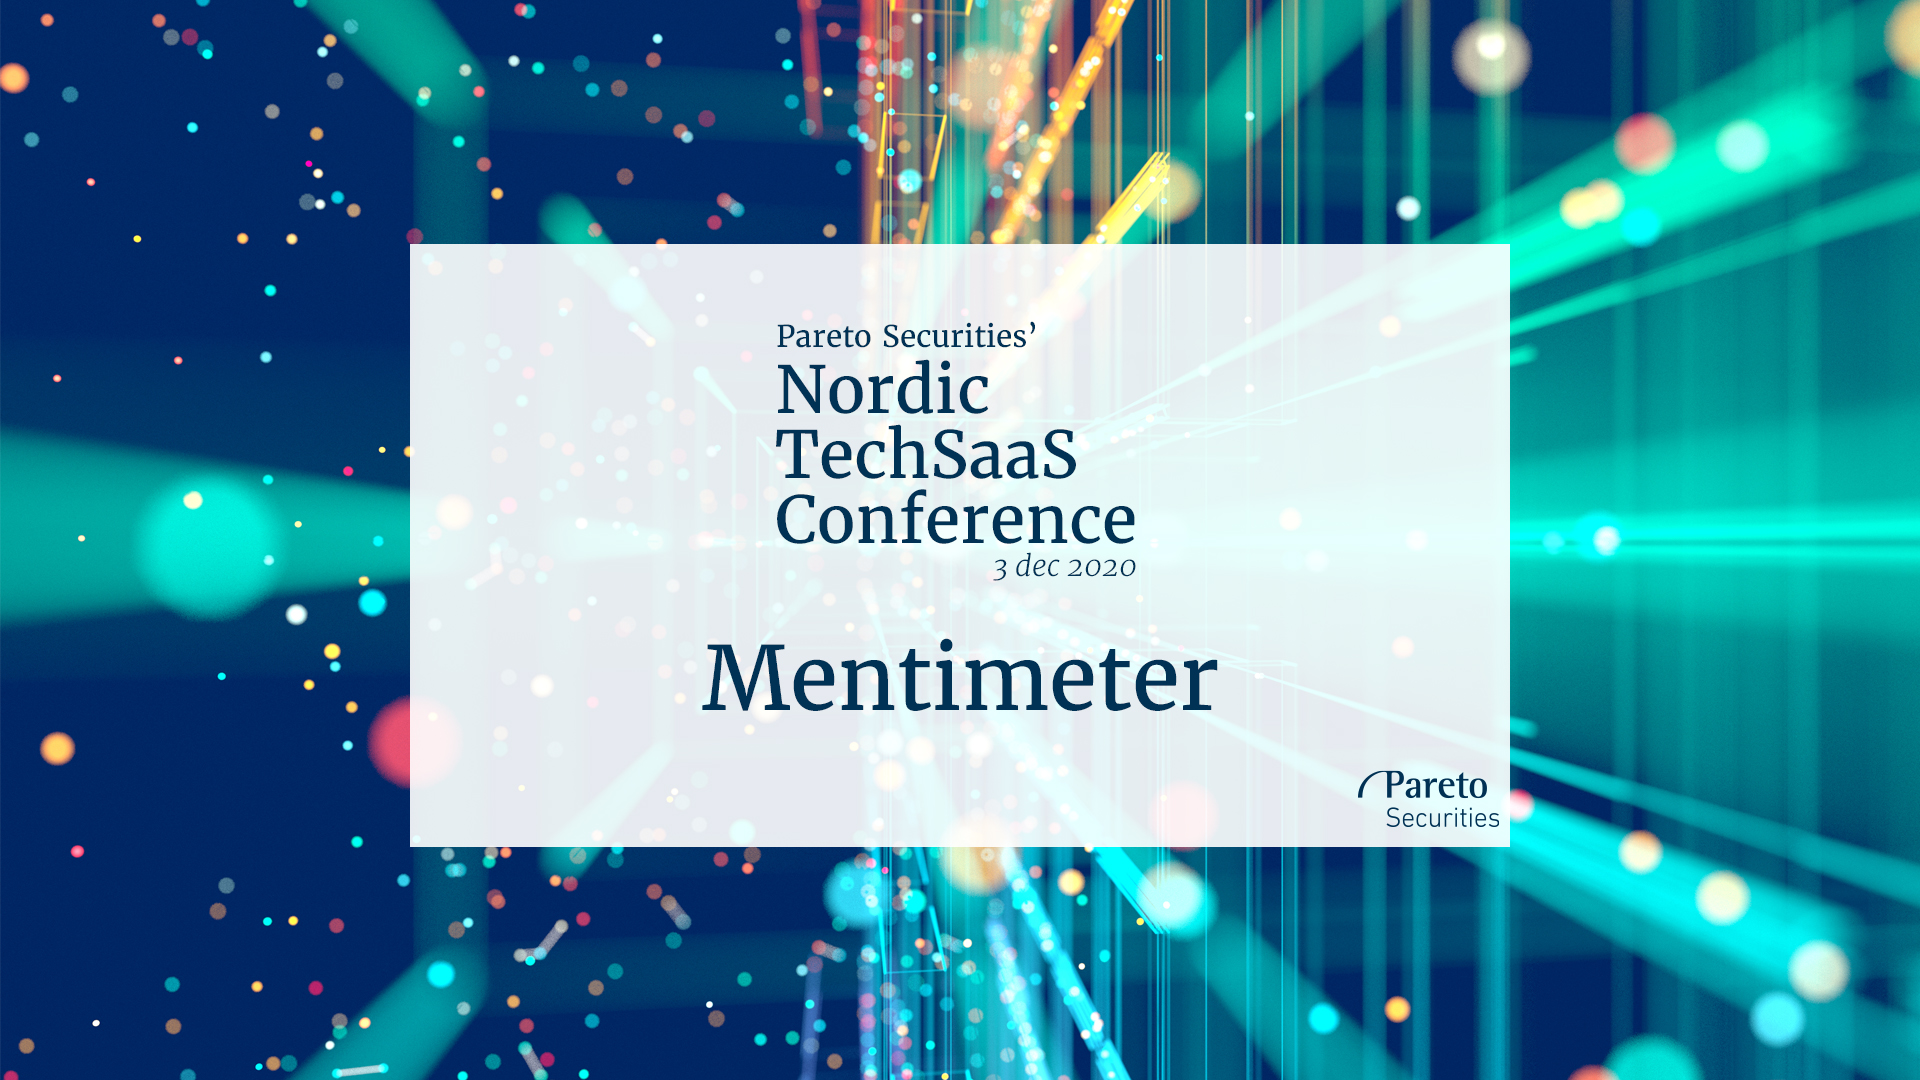 Mentimeter / Pareto Securities’ virtual Nordic TechSaaS Conference